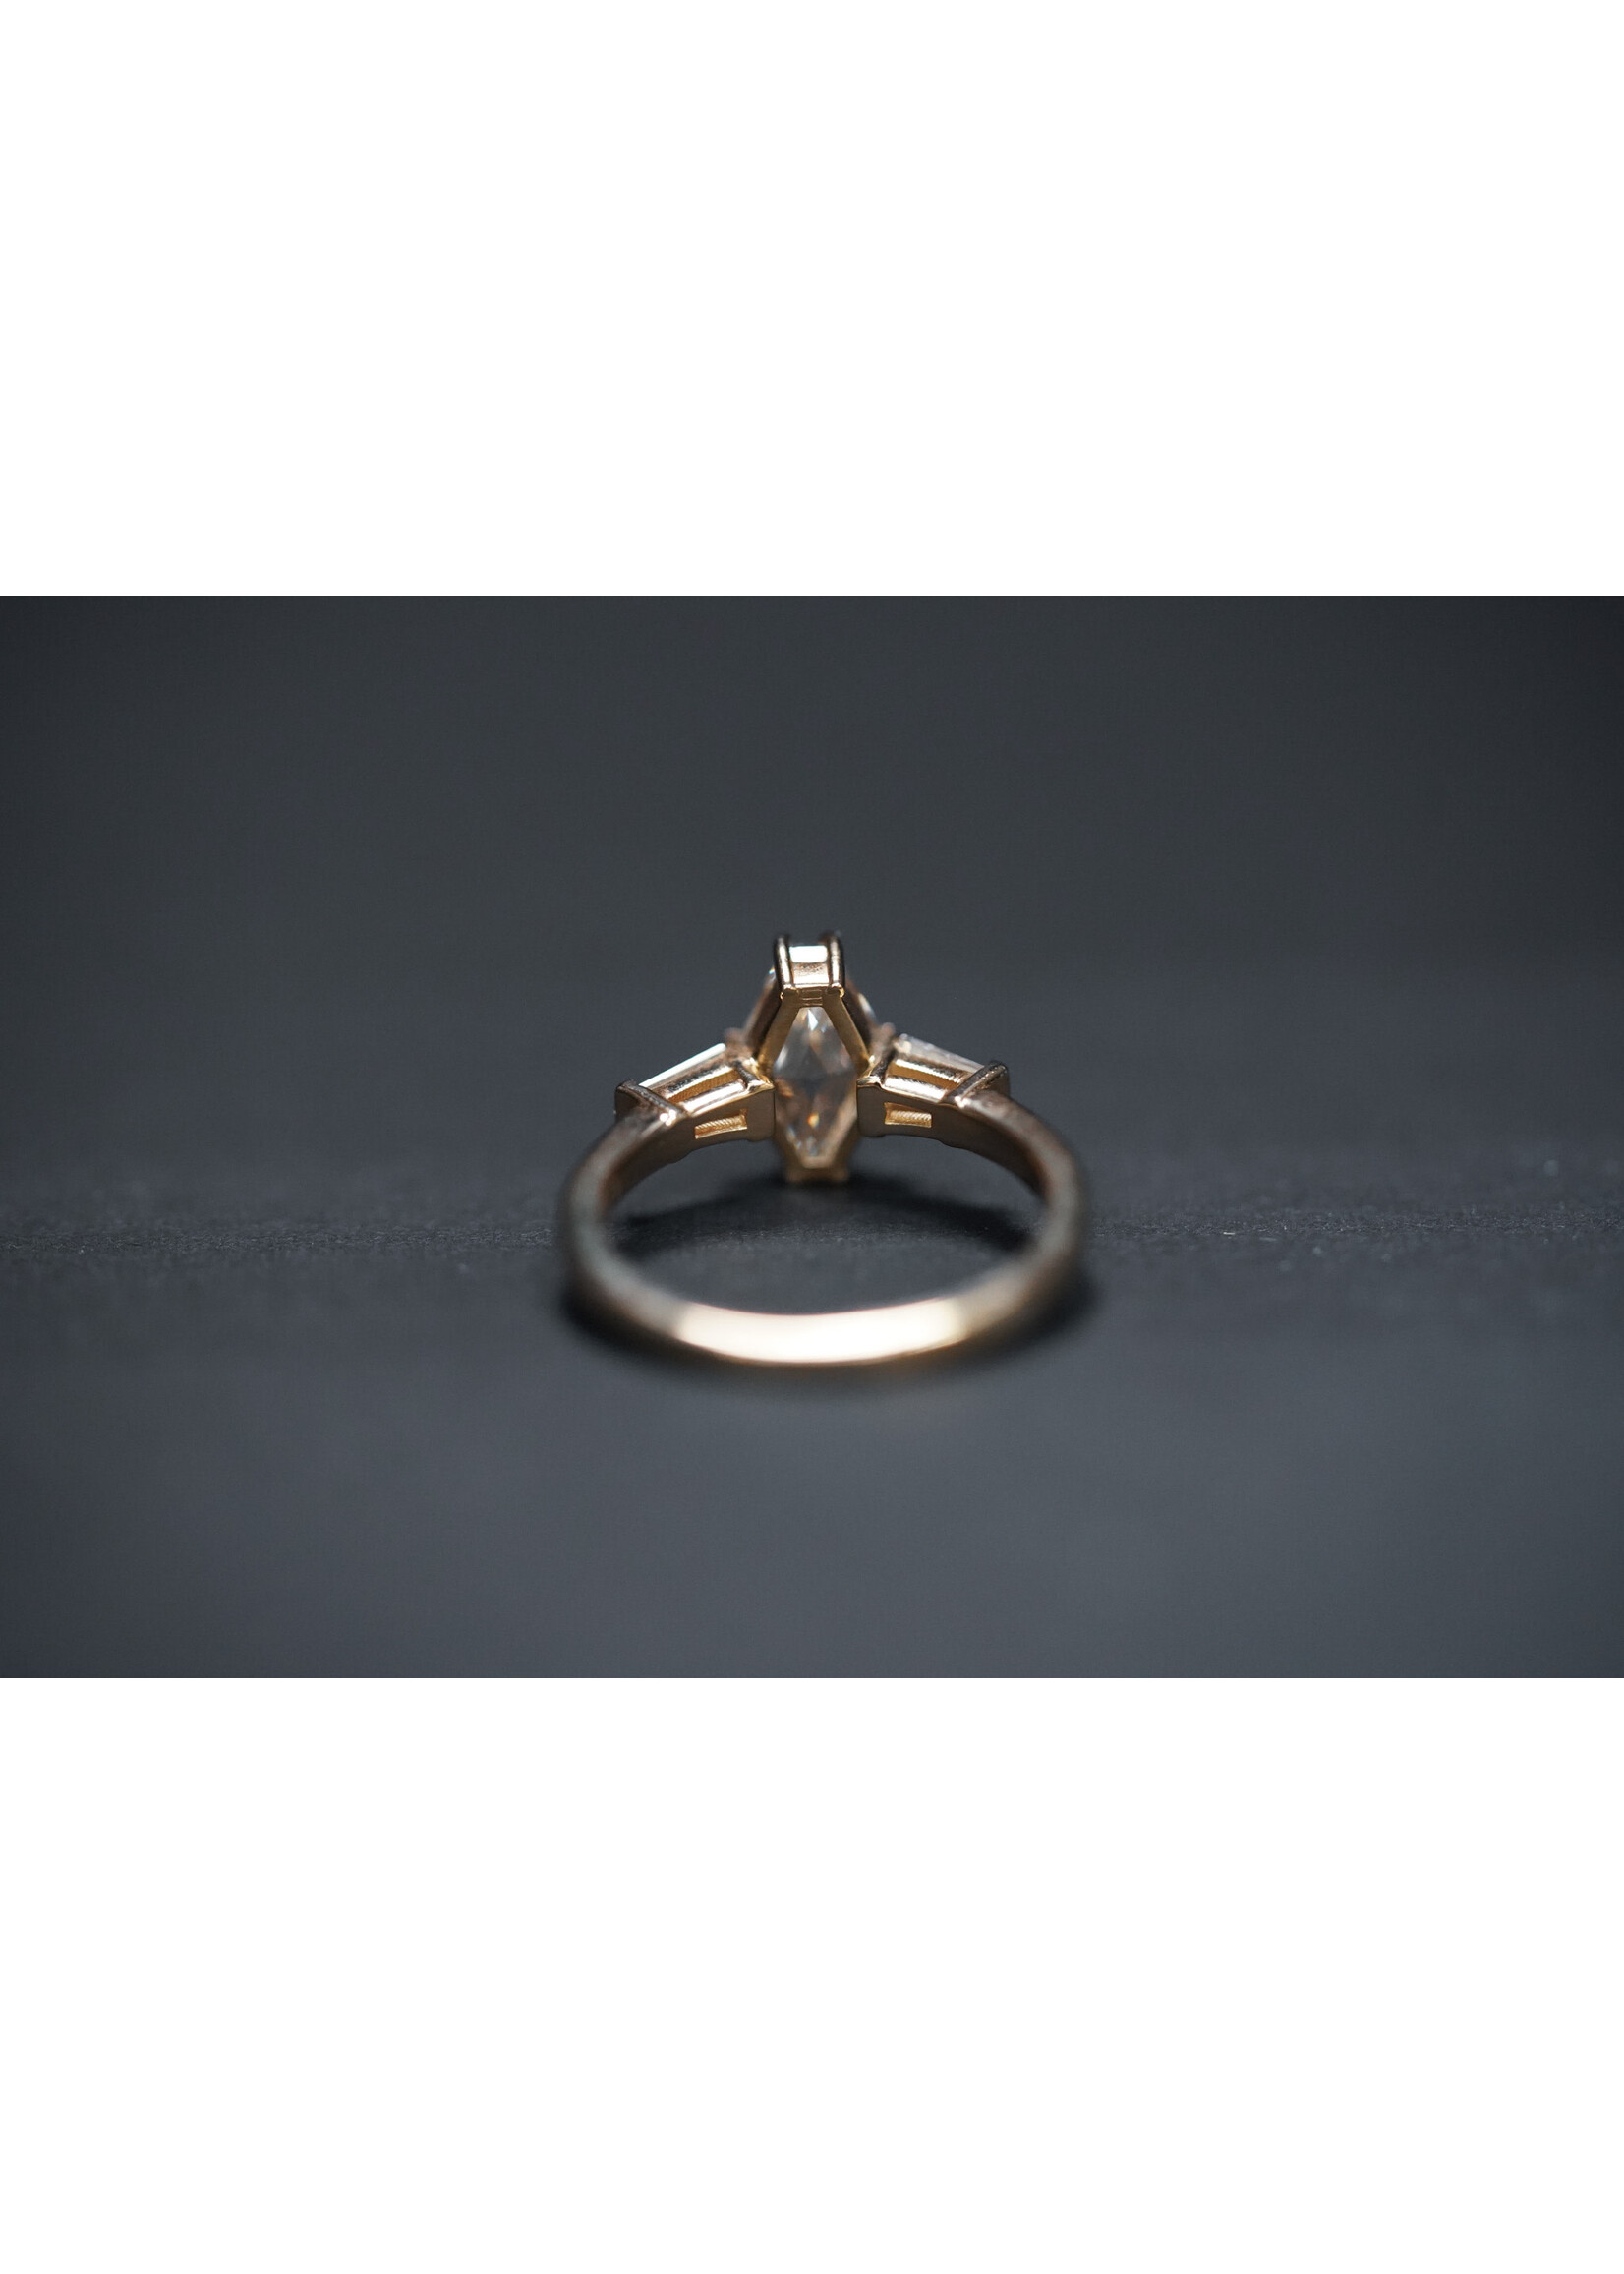 14KY 3.28g 1.75ctw (1.51ctr) K/VS2 Rhomboid Cut Diamond Engagement Ring (size 7)